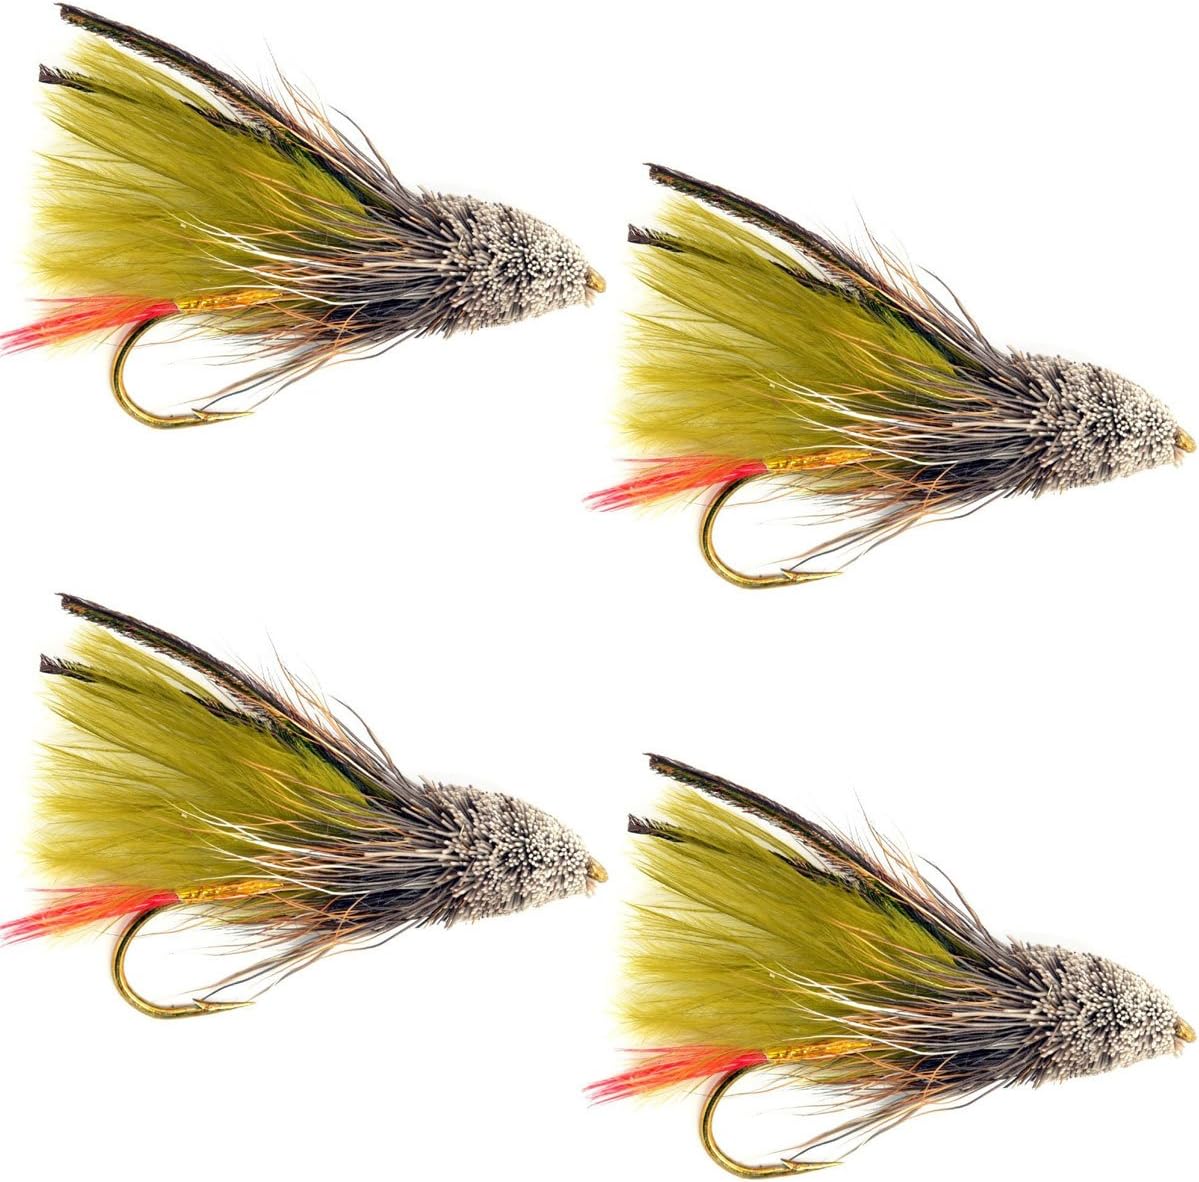 Olive Marabou Muddler Minnow Streamer Flies - 4 Fly Fishing Flies - Hook Size 8